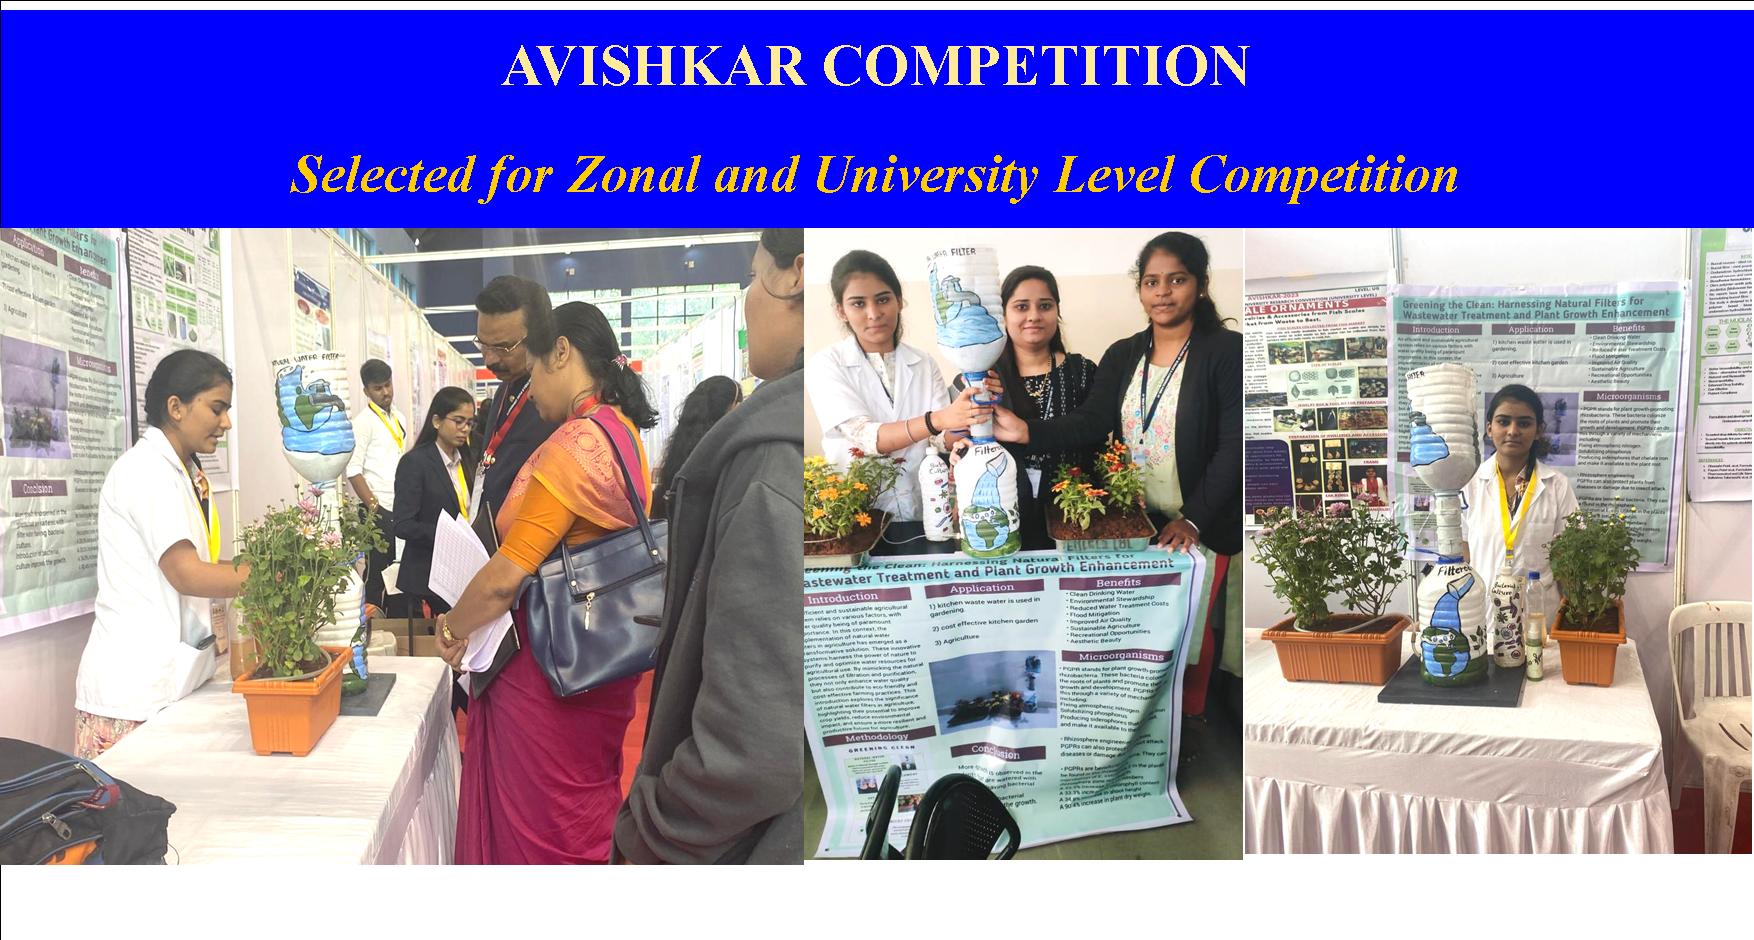 Avishkar Competition